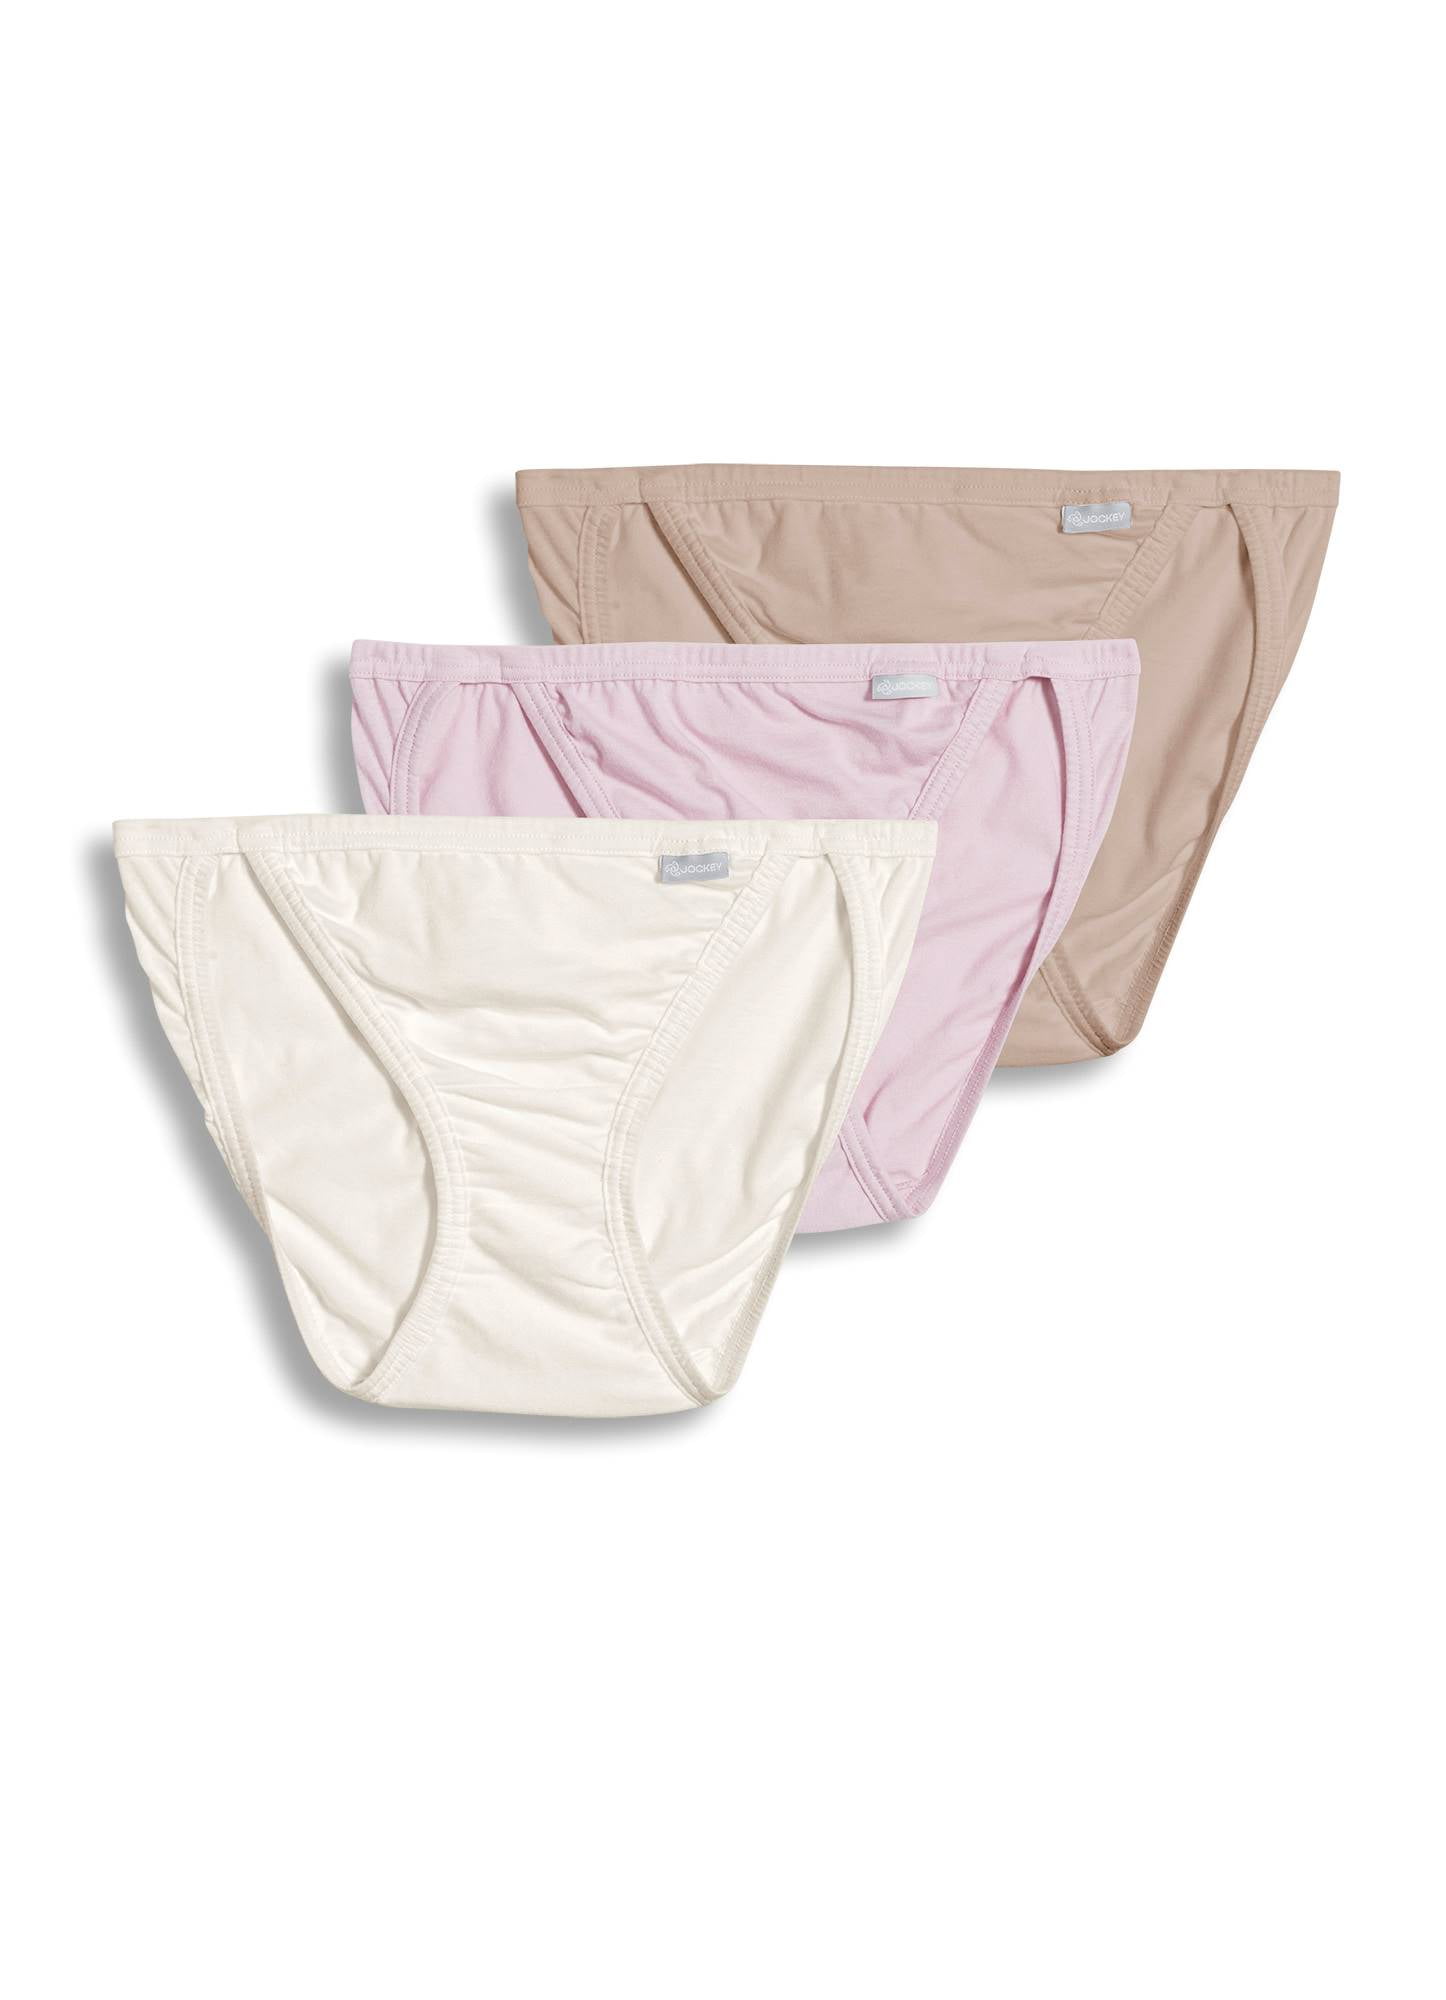 Jockey Men's Underwear Elance Bikini - 3 Pack, White, S : :  Clothing, Shoes & Accessories